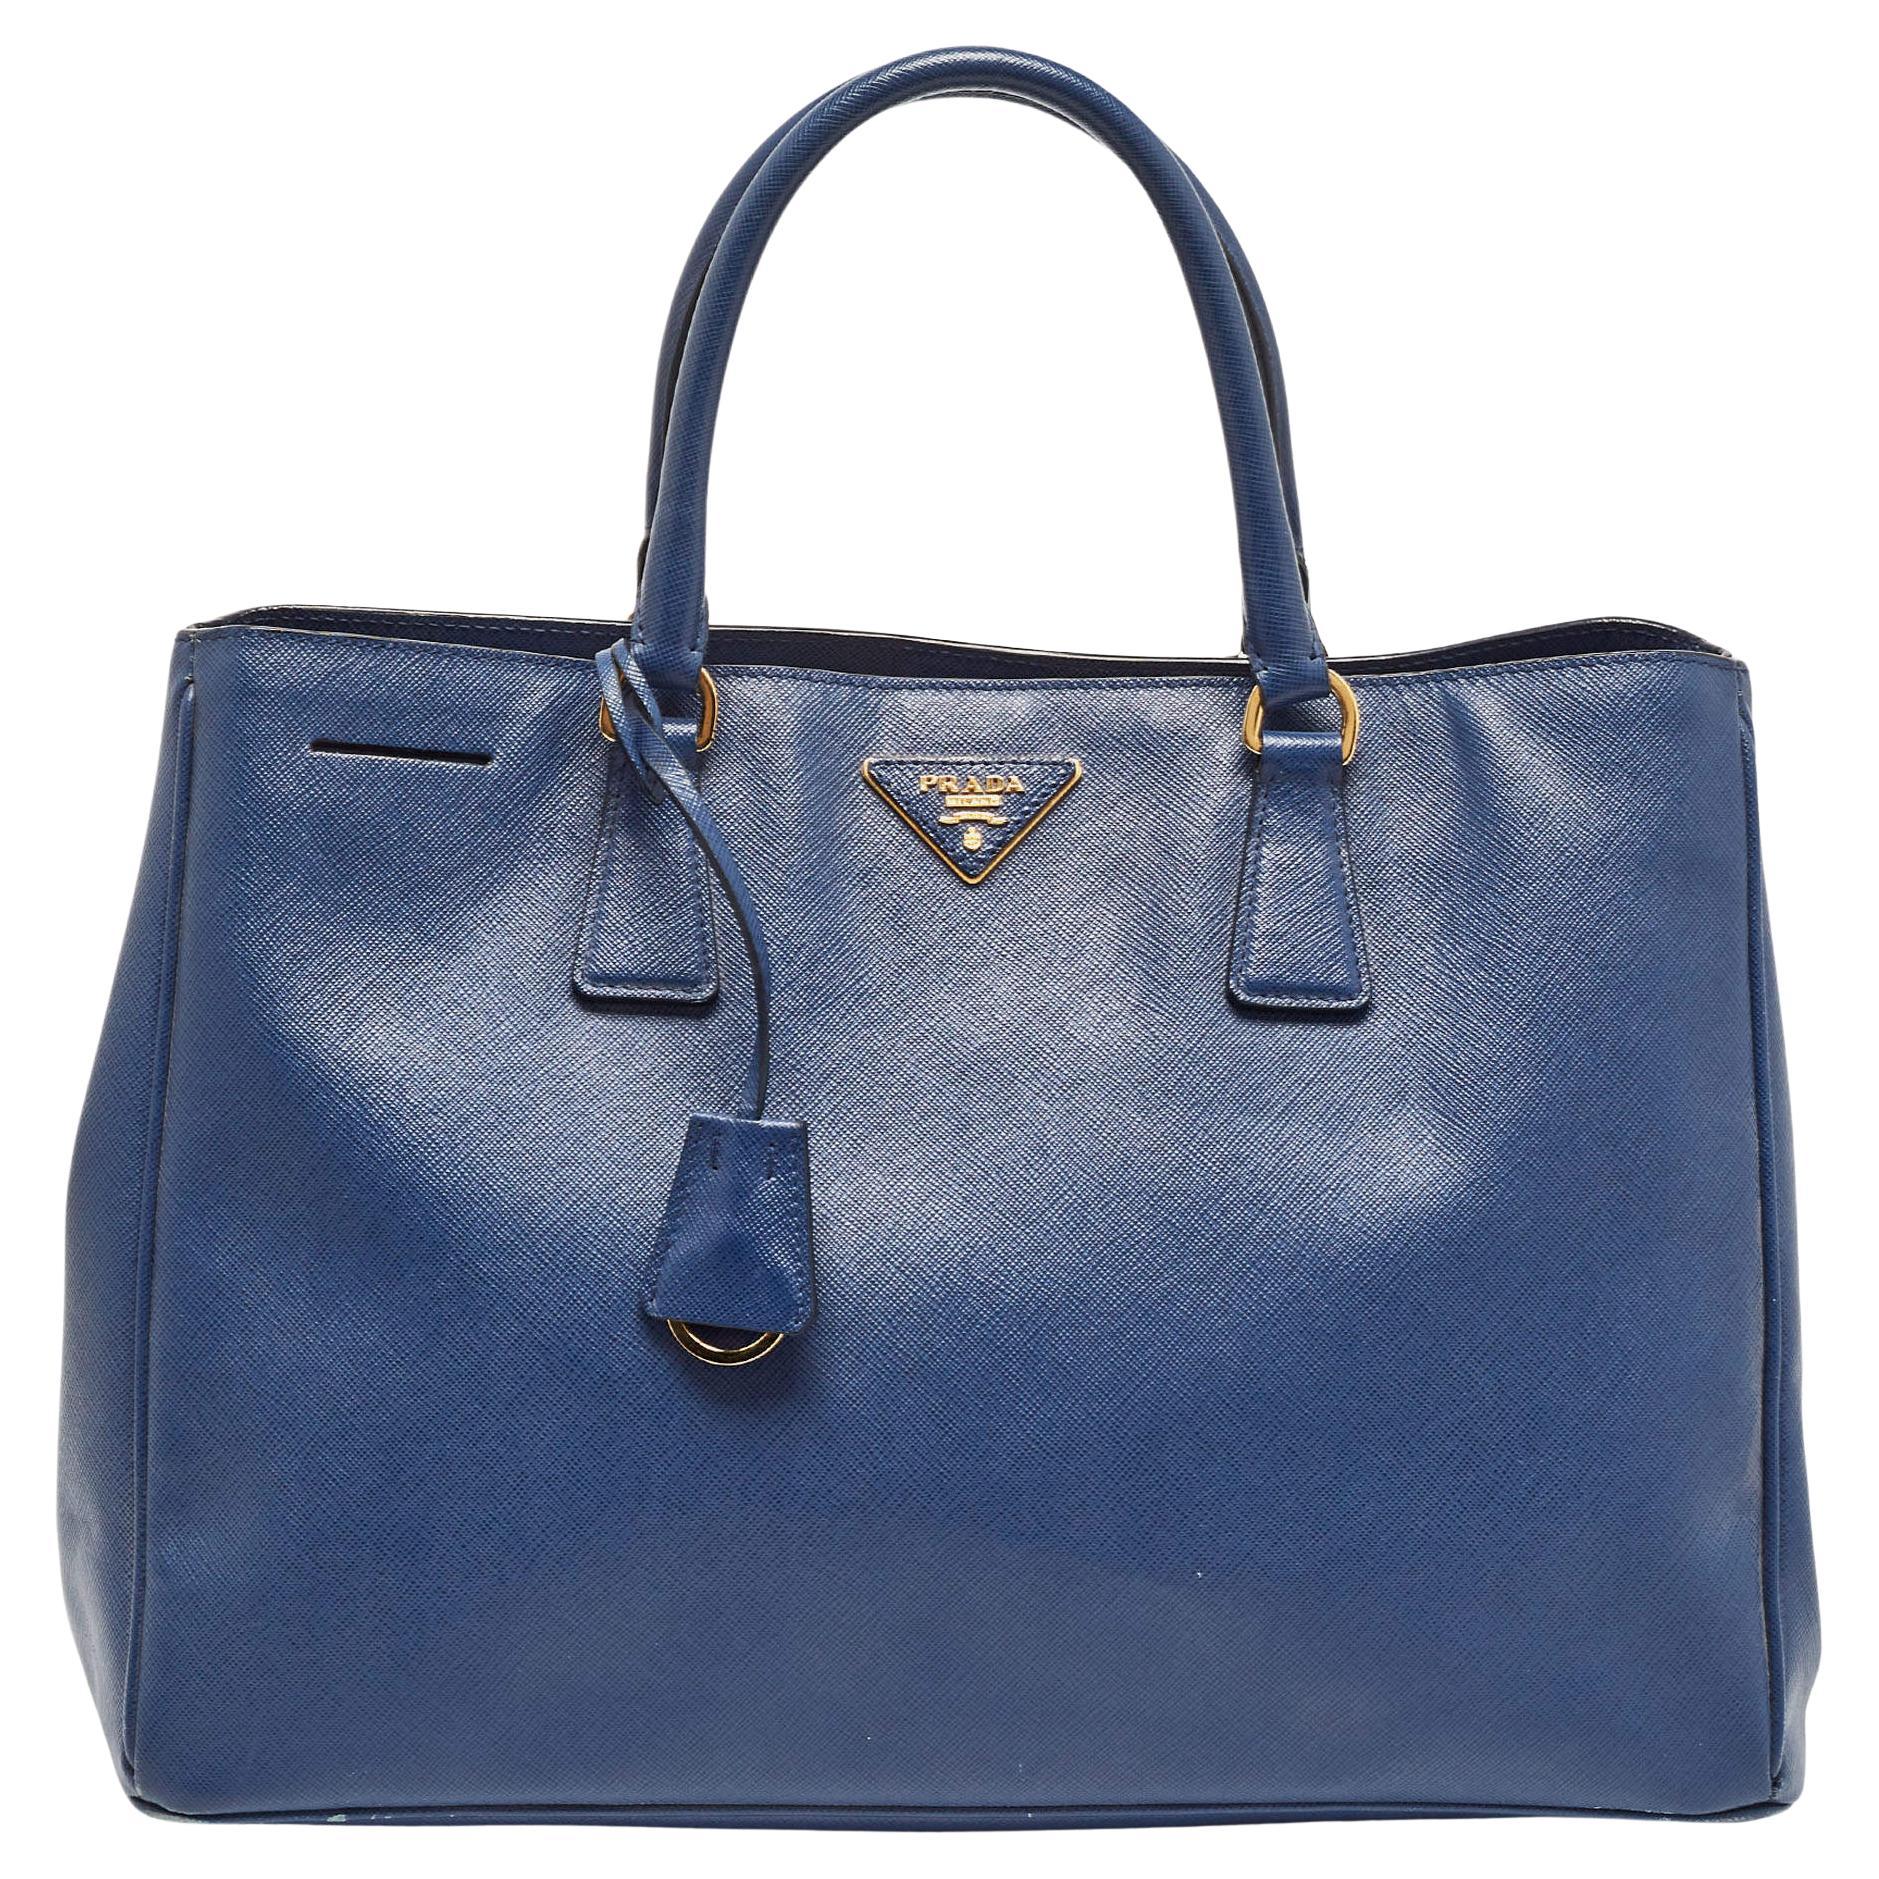 Prada - Grand sac à main en cuir Saffiano bleu pour jardiniers en vente